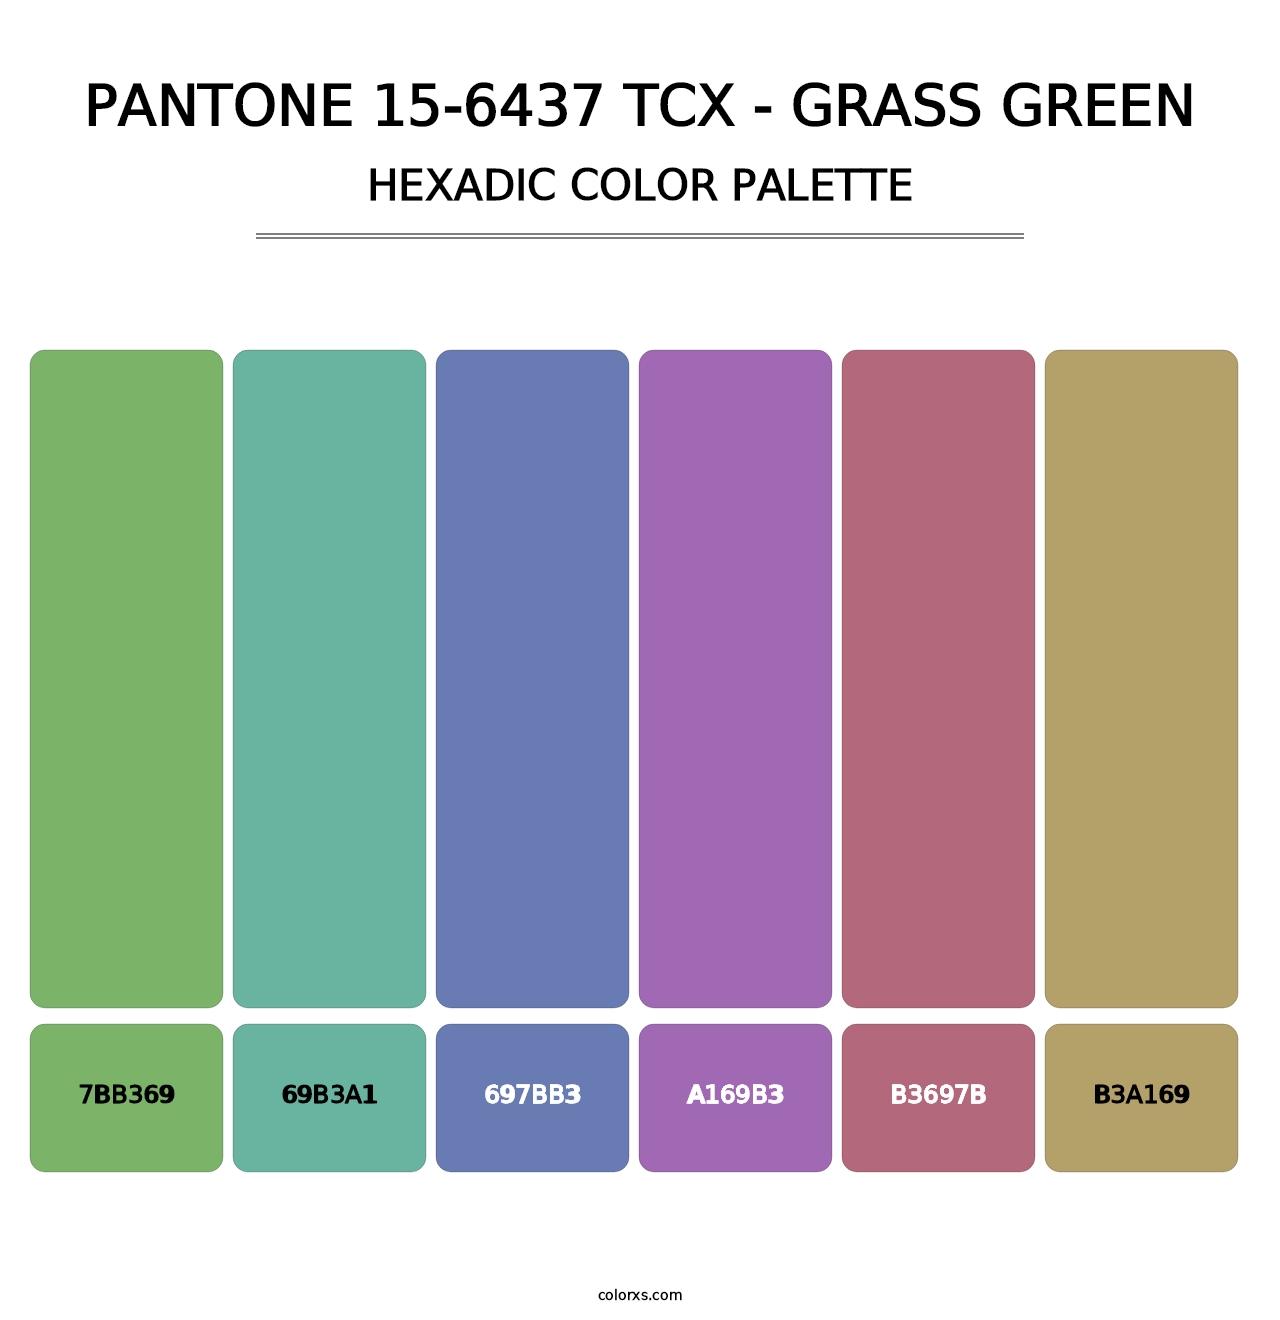 PANTONE 15-6437 TCX - Grass Green - Hexadic Color Palette